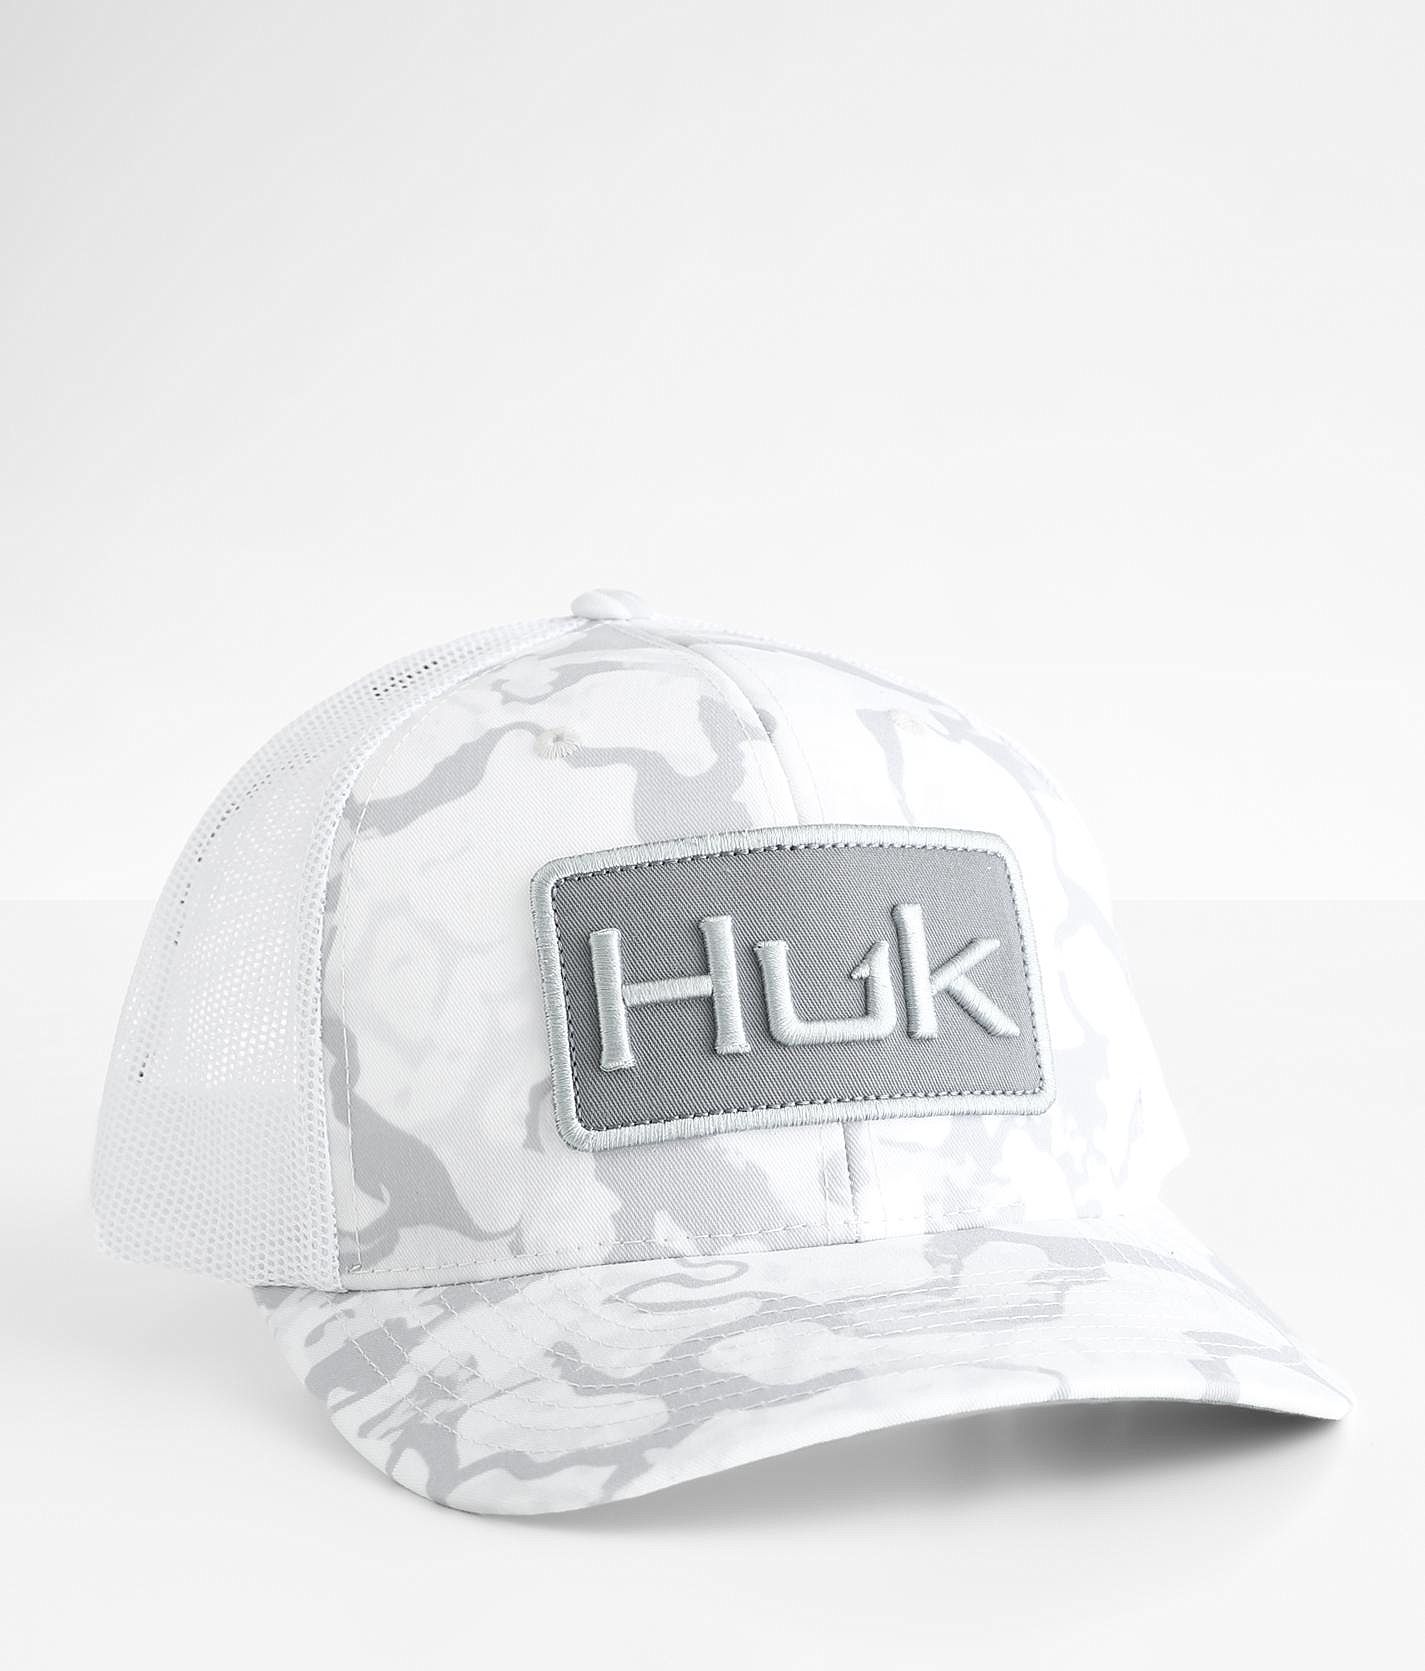 HUK Fin Flats Camo Trucker Hat